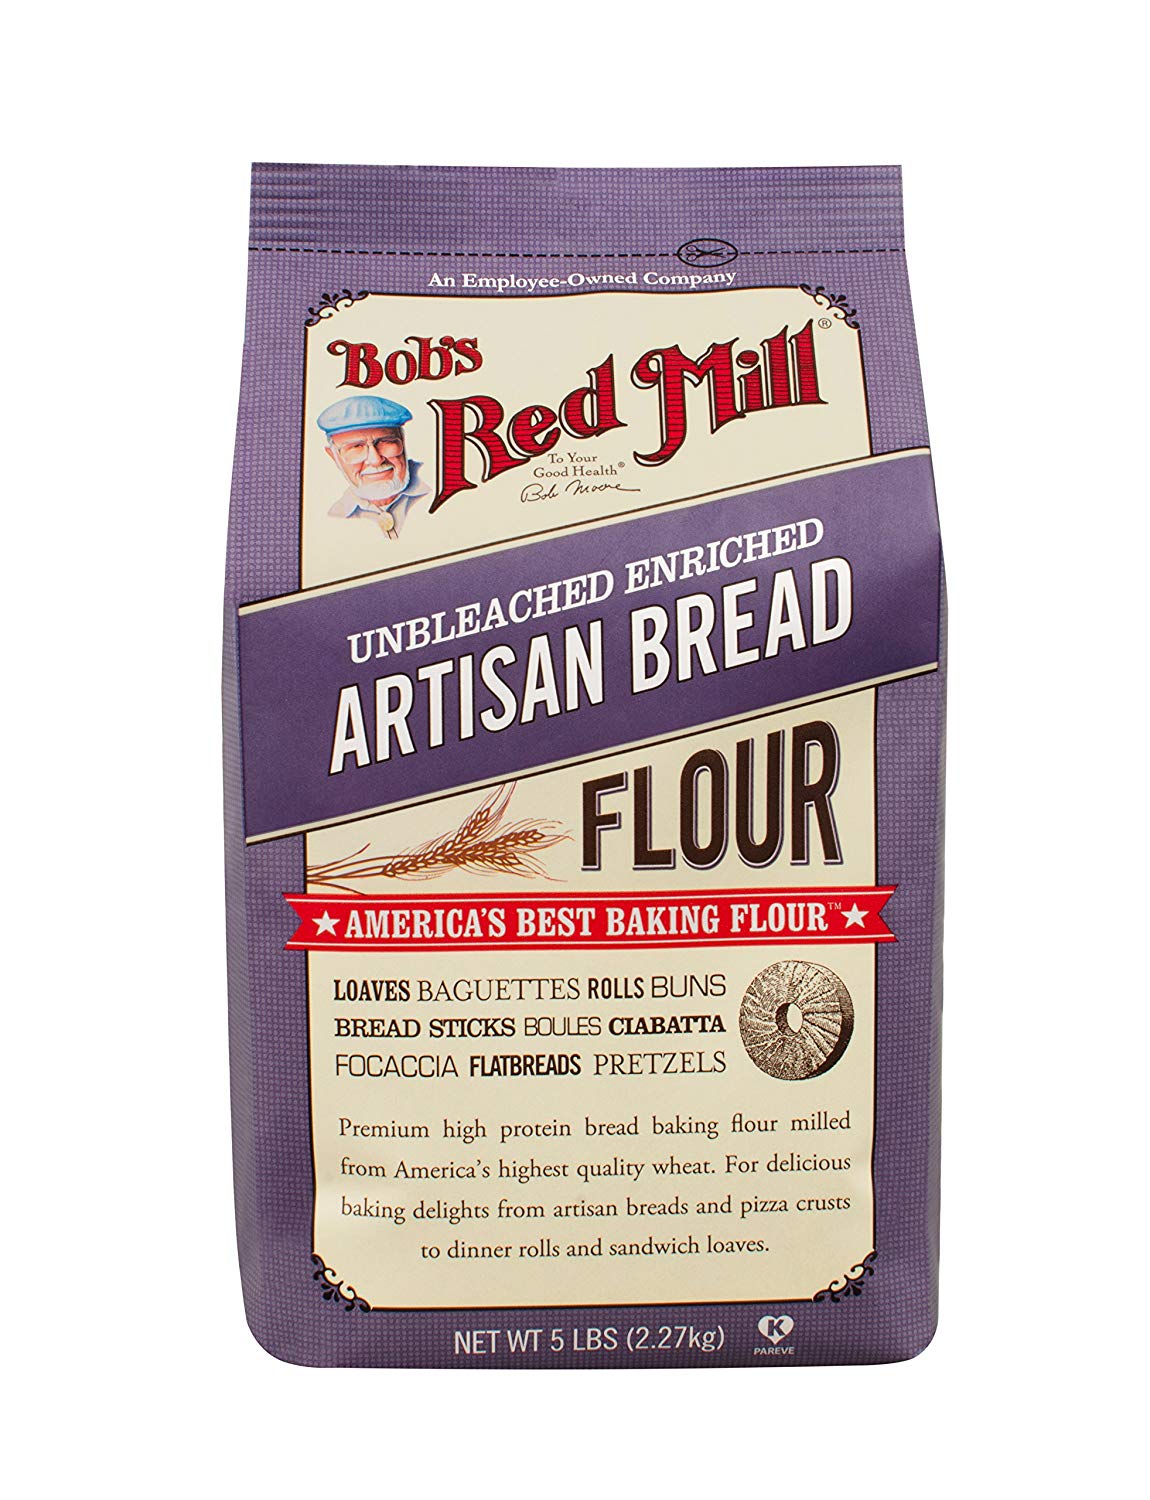 Bột Mỳ Artisan Bread Flour Bob s Red Mill 2.27kg